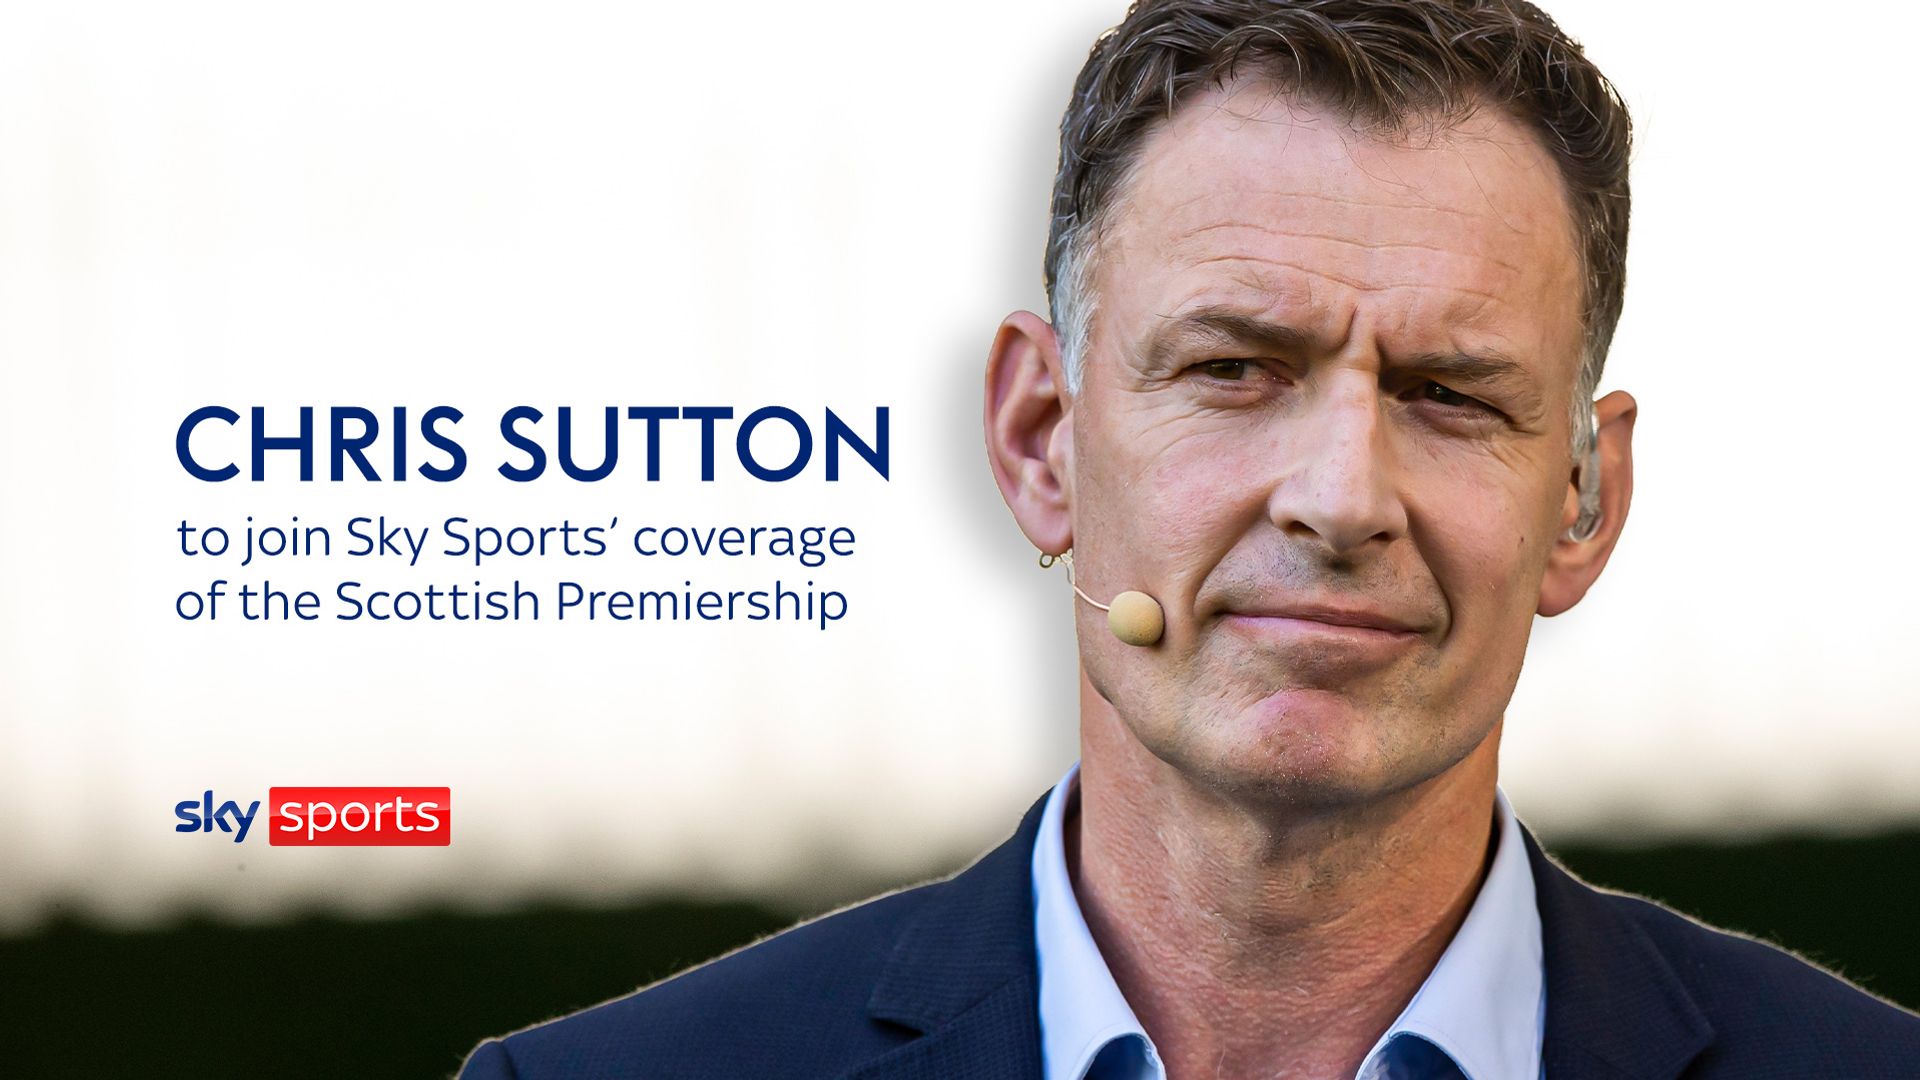 Chris Sutton joins Sky Sports' Scottish Premiership coverage